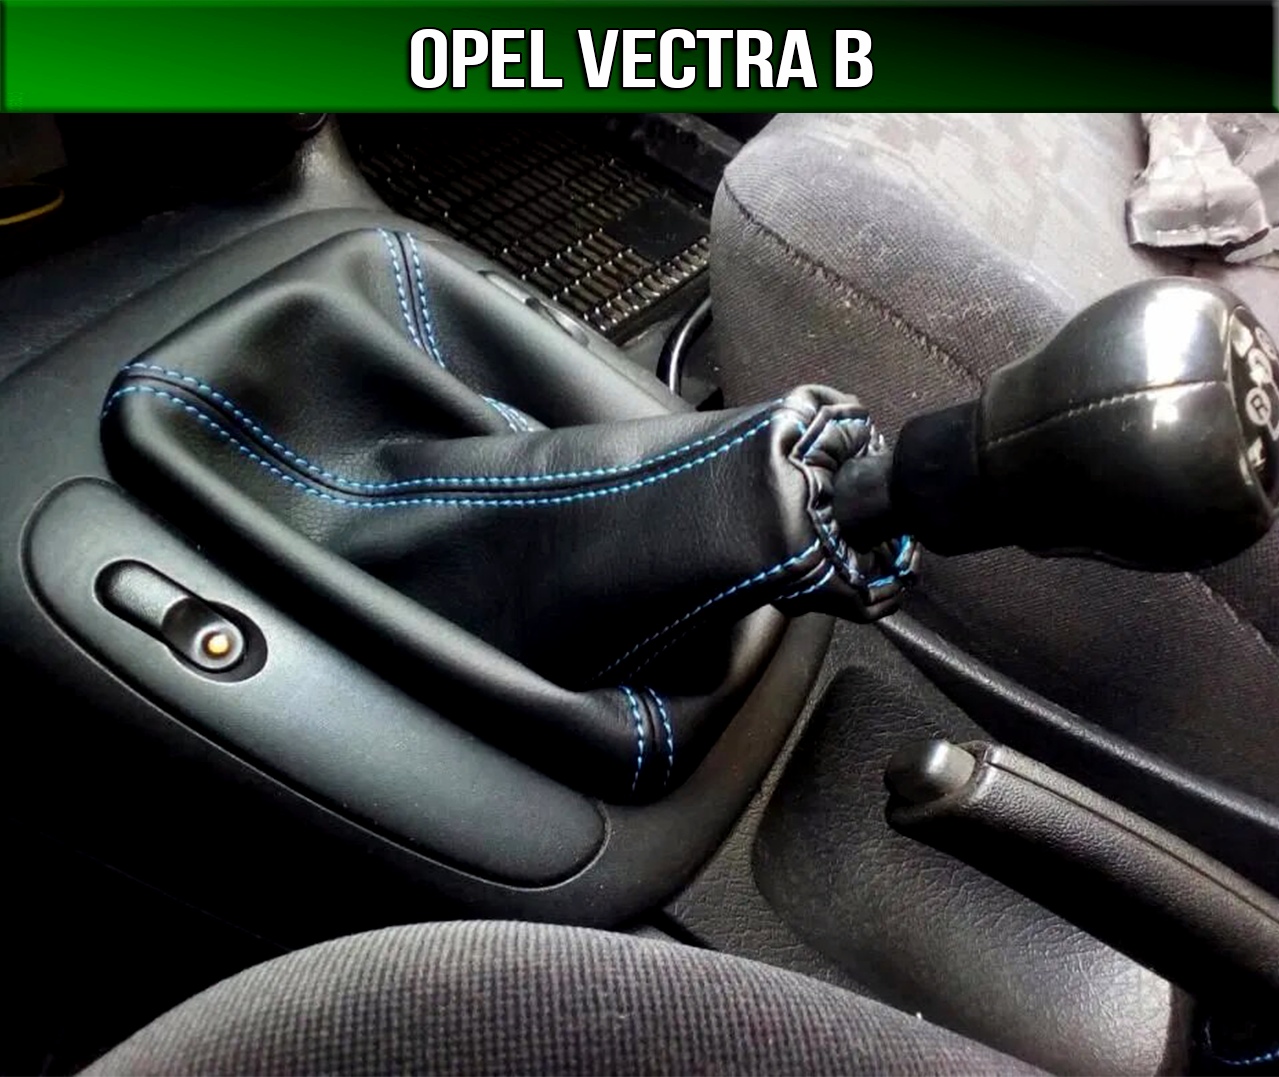 Чехол КПП Opel Vectra b. Чехол КПП на Opel Vectra. Opel Omega b чехол КПП. Чехол КПП ВАЗ Opel Vectra a.